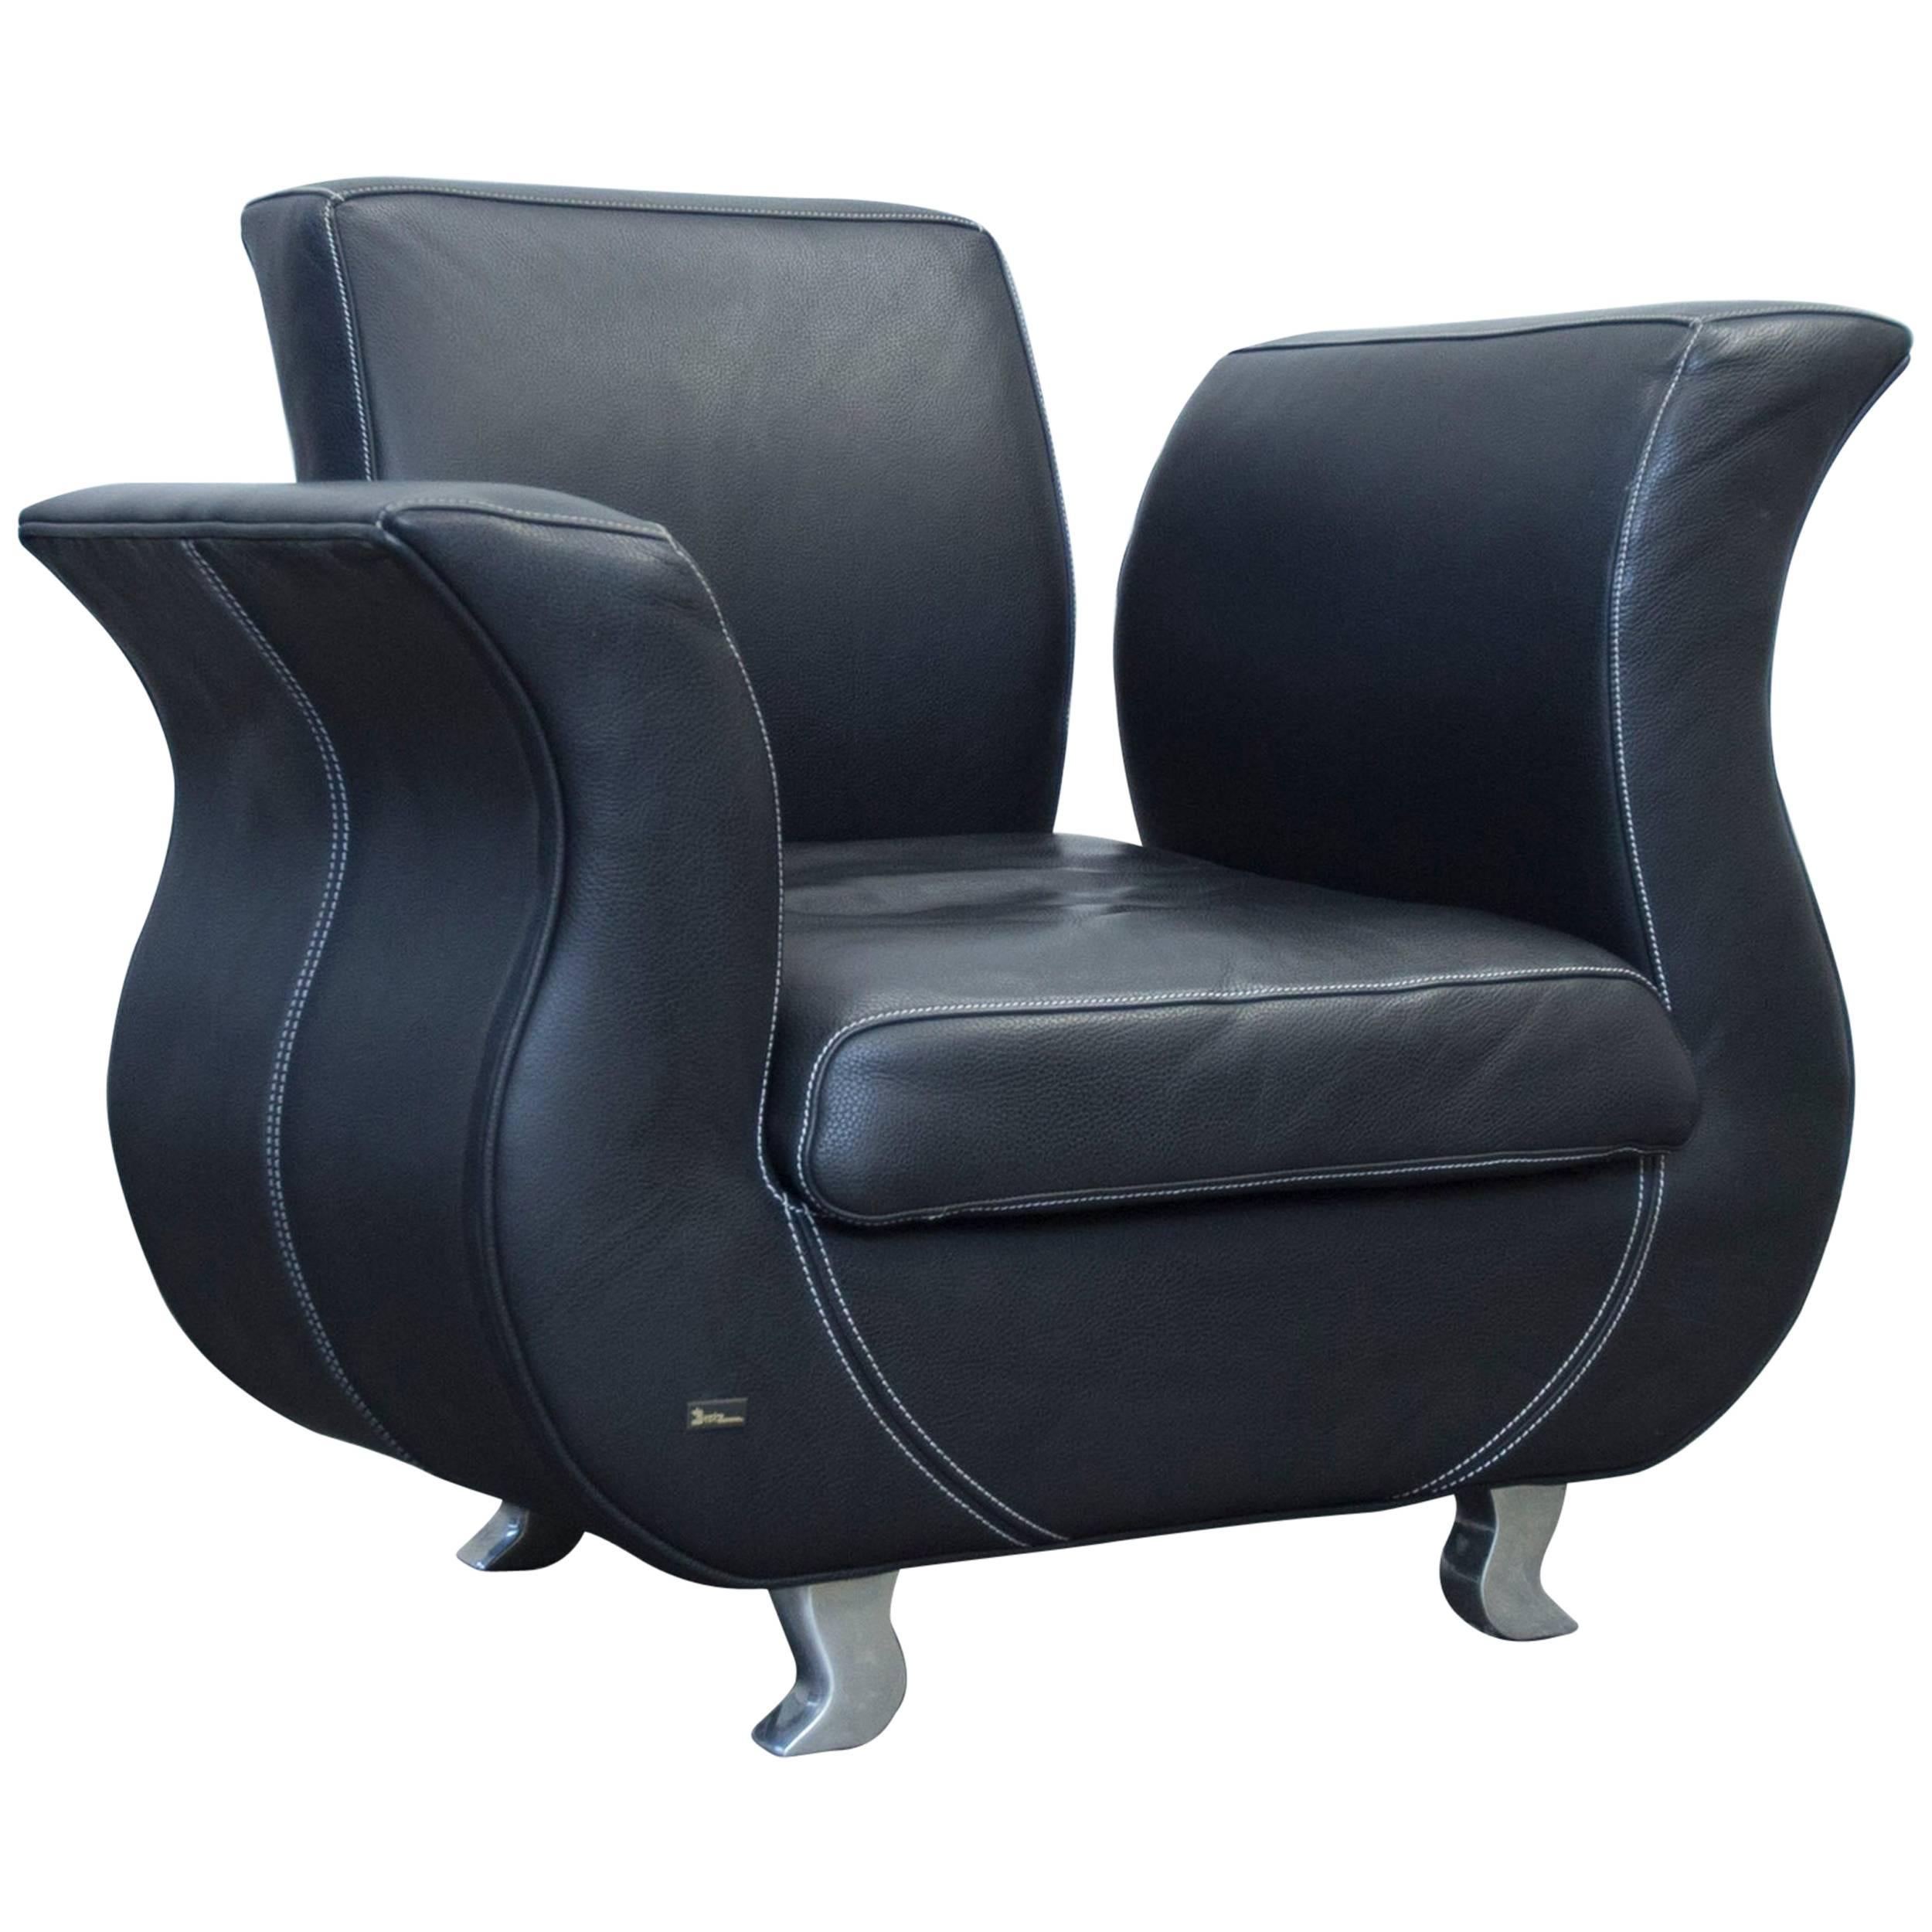 Bretz Moon Designer Leather Armchair Black One Seat Couch Modern